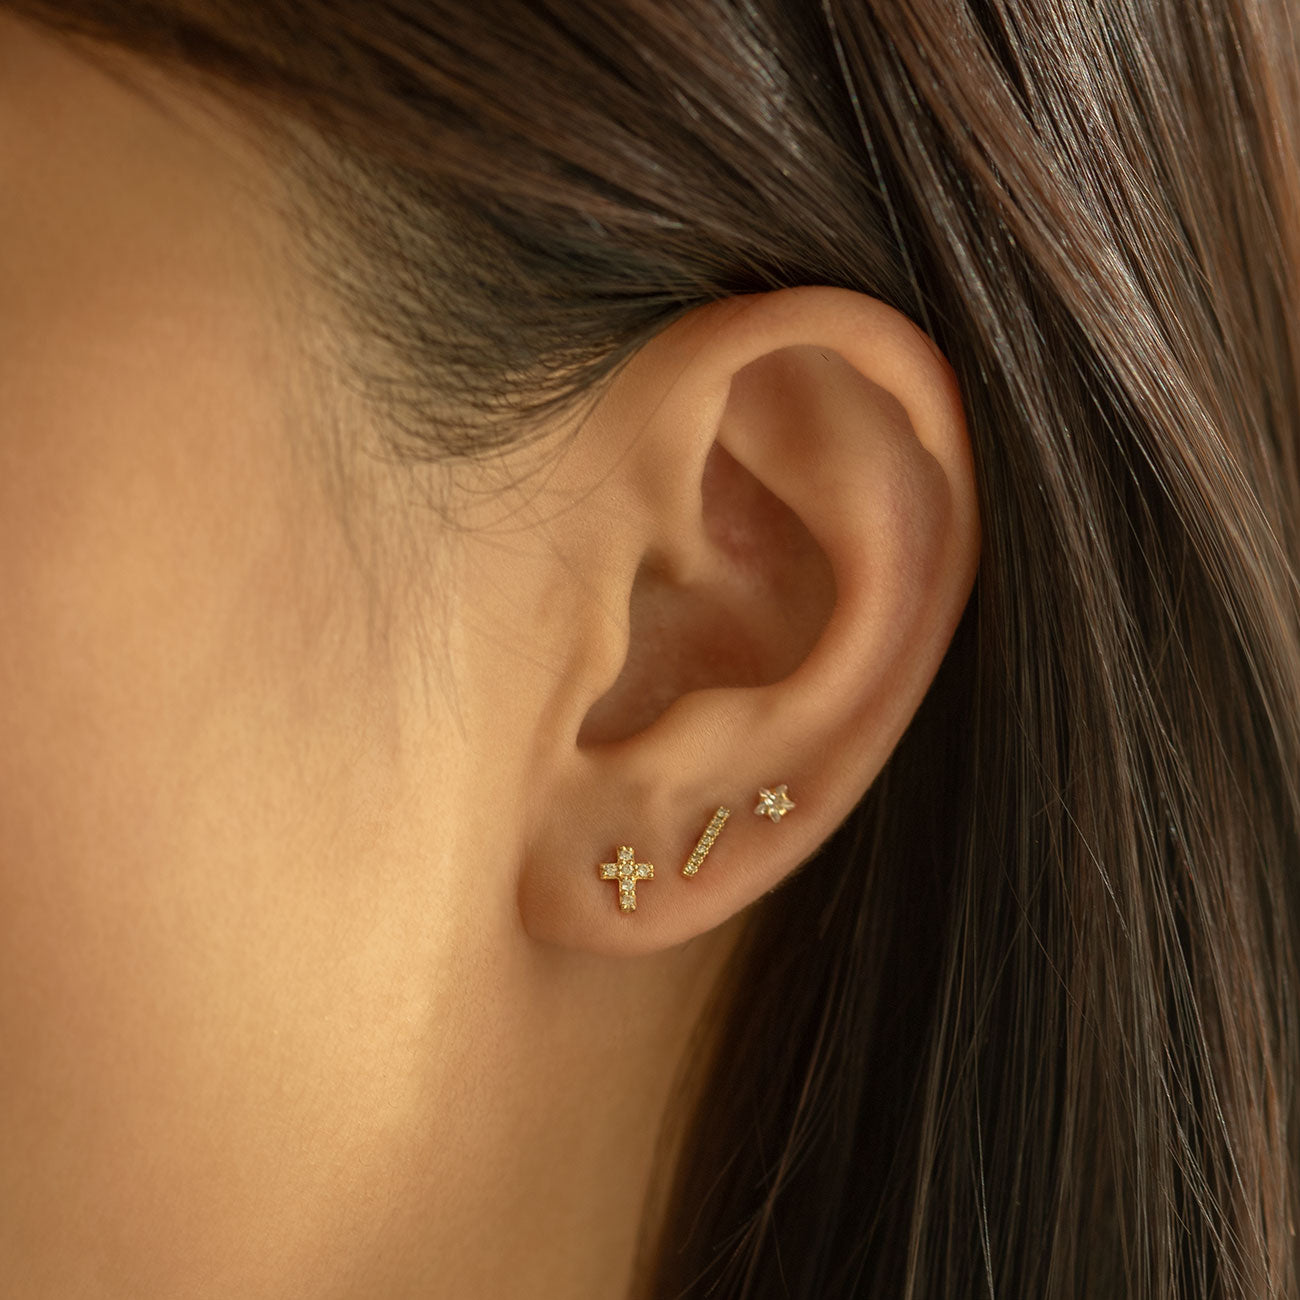 Gold Star Earring Studs